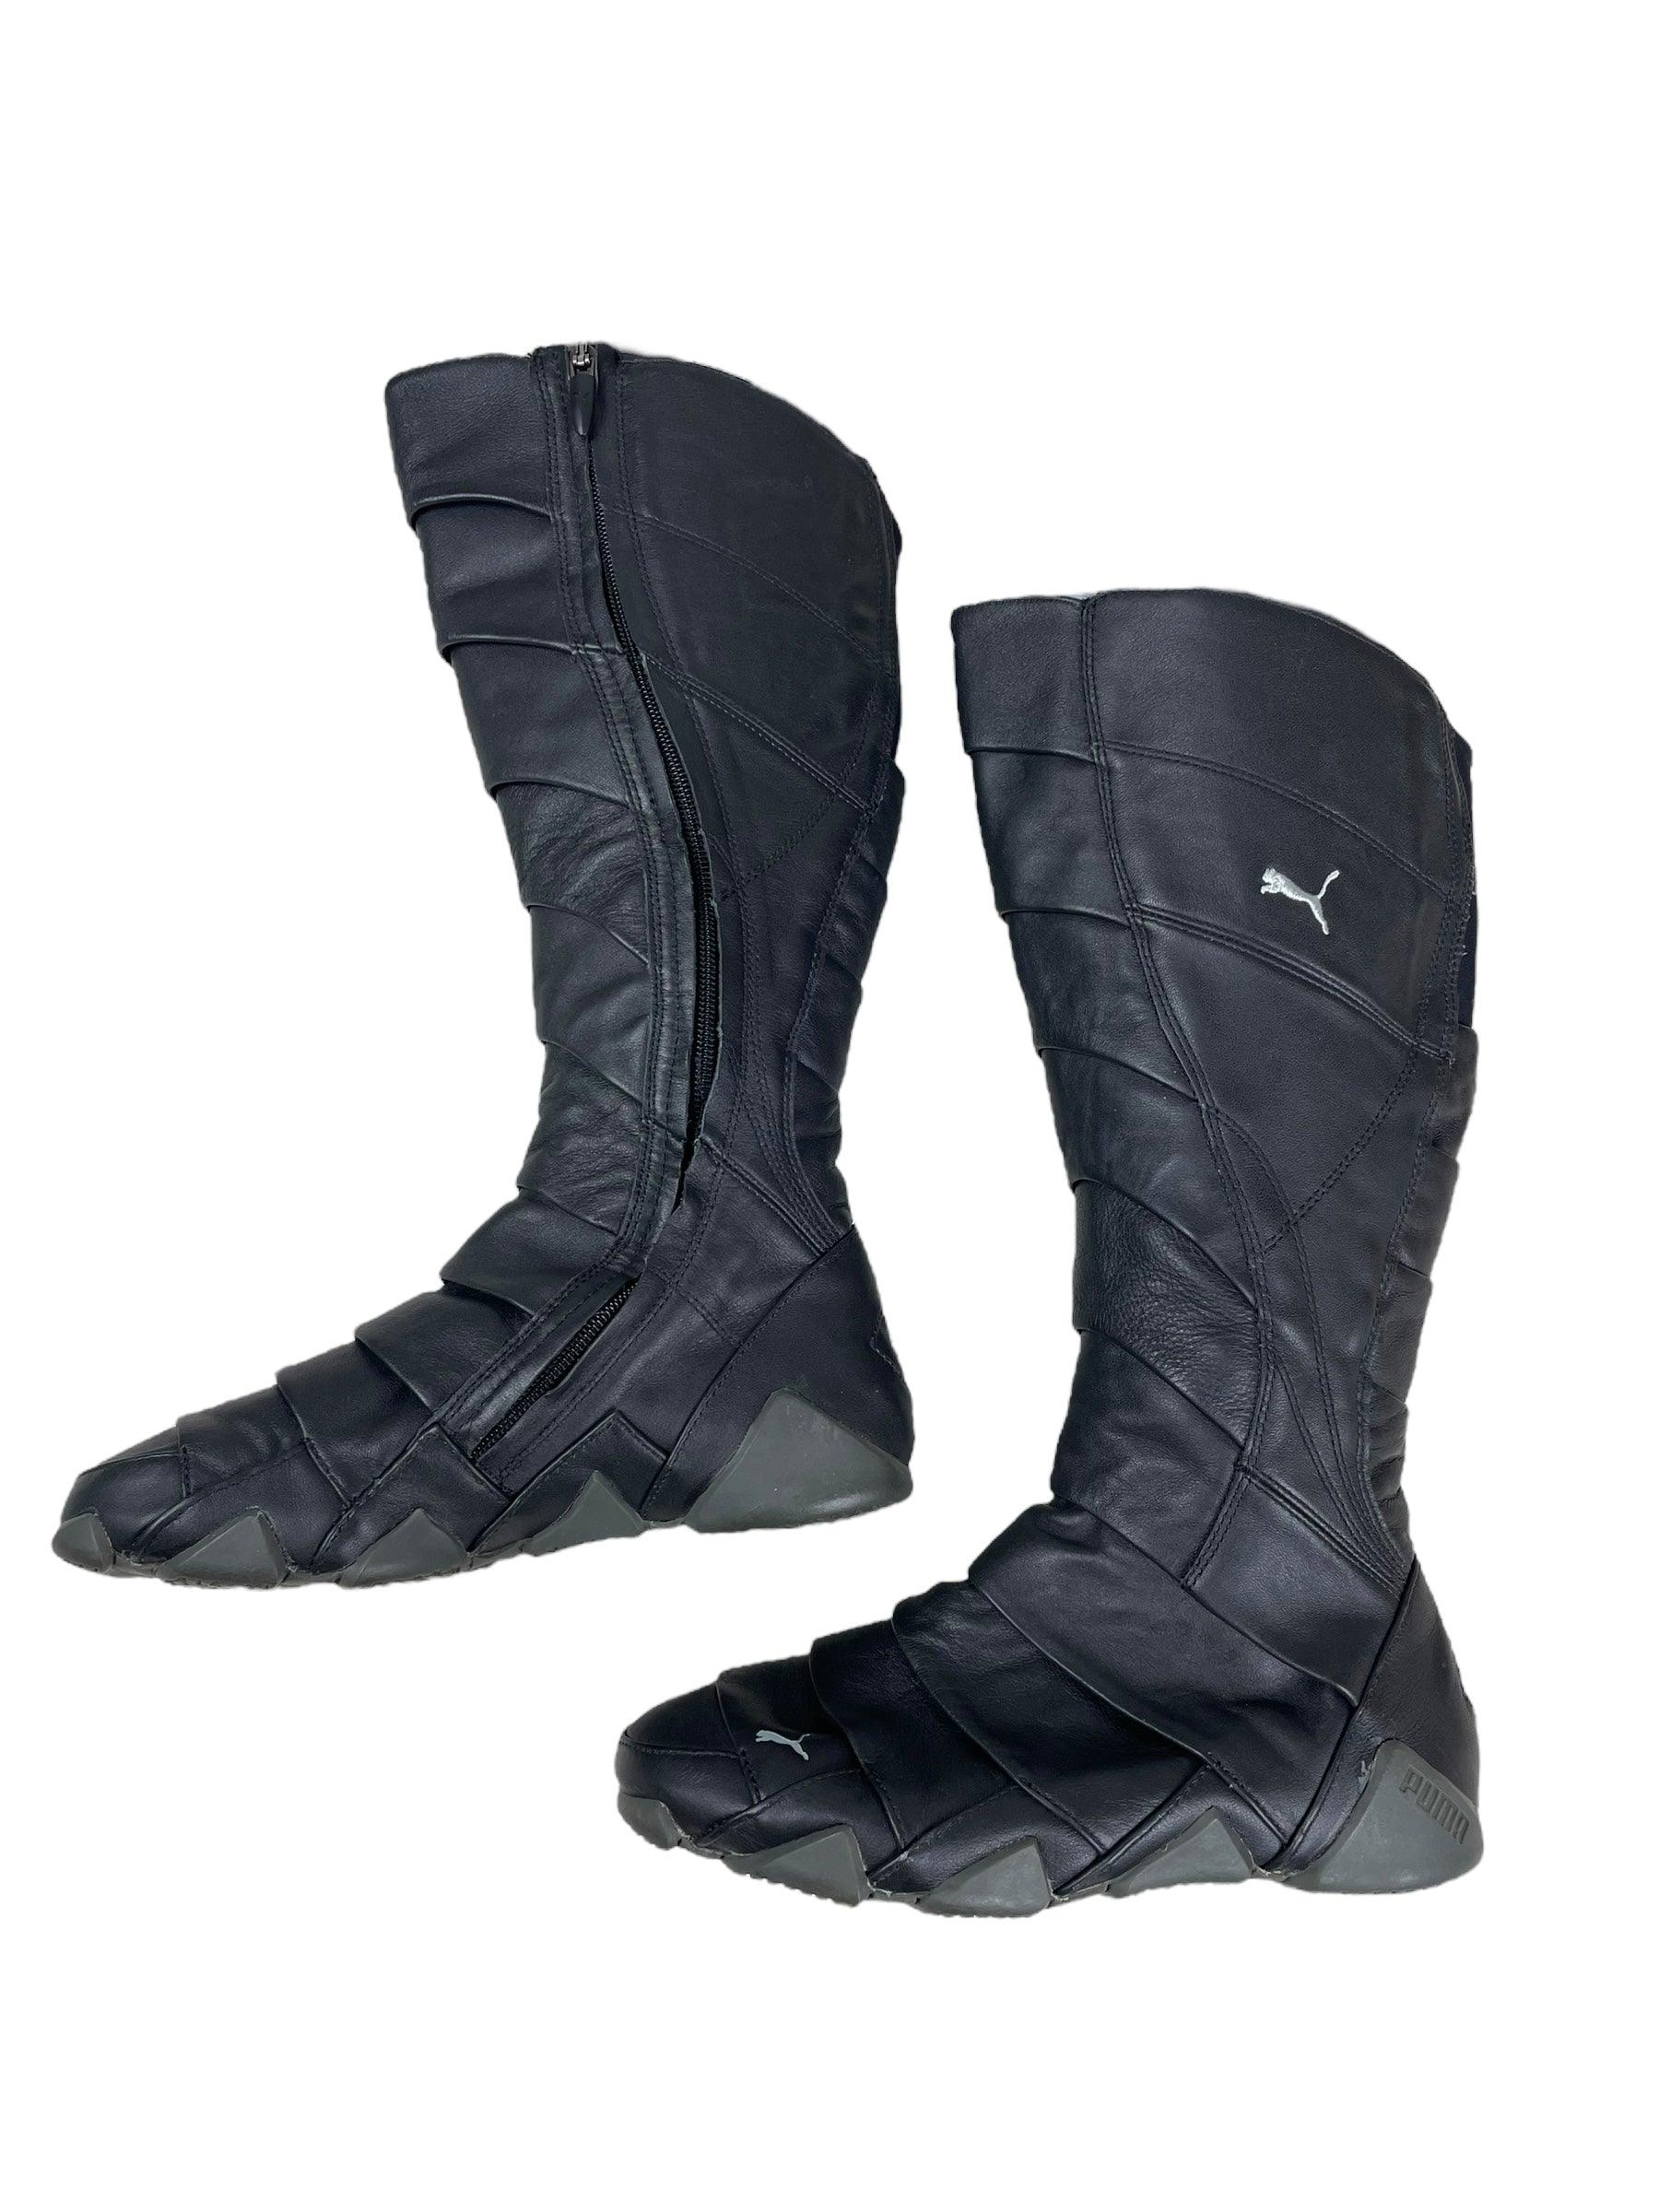 Puma Satori boots - Known Source